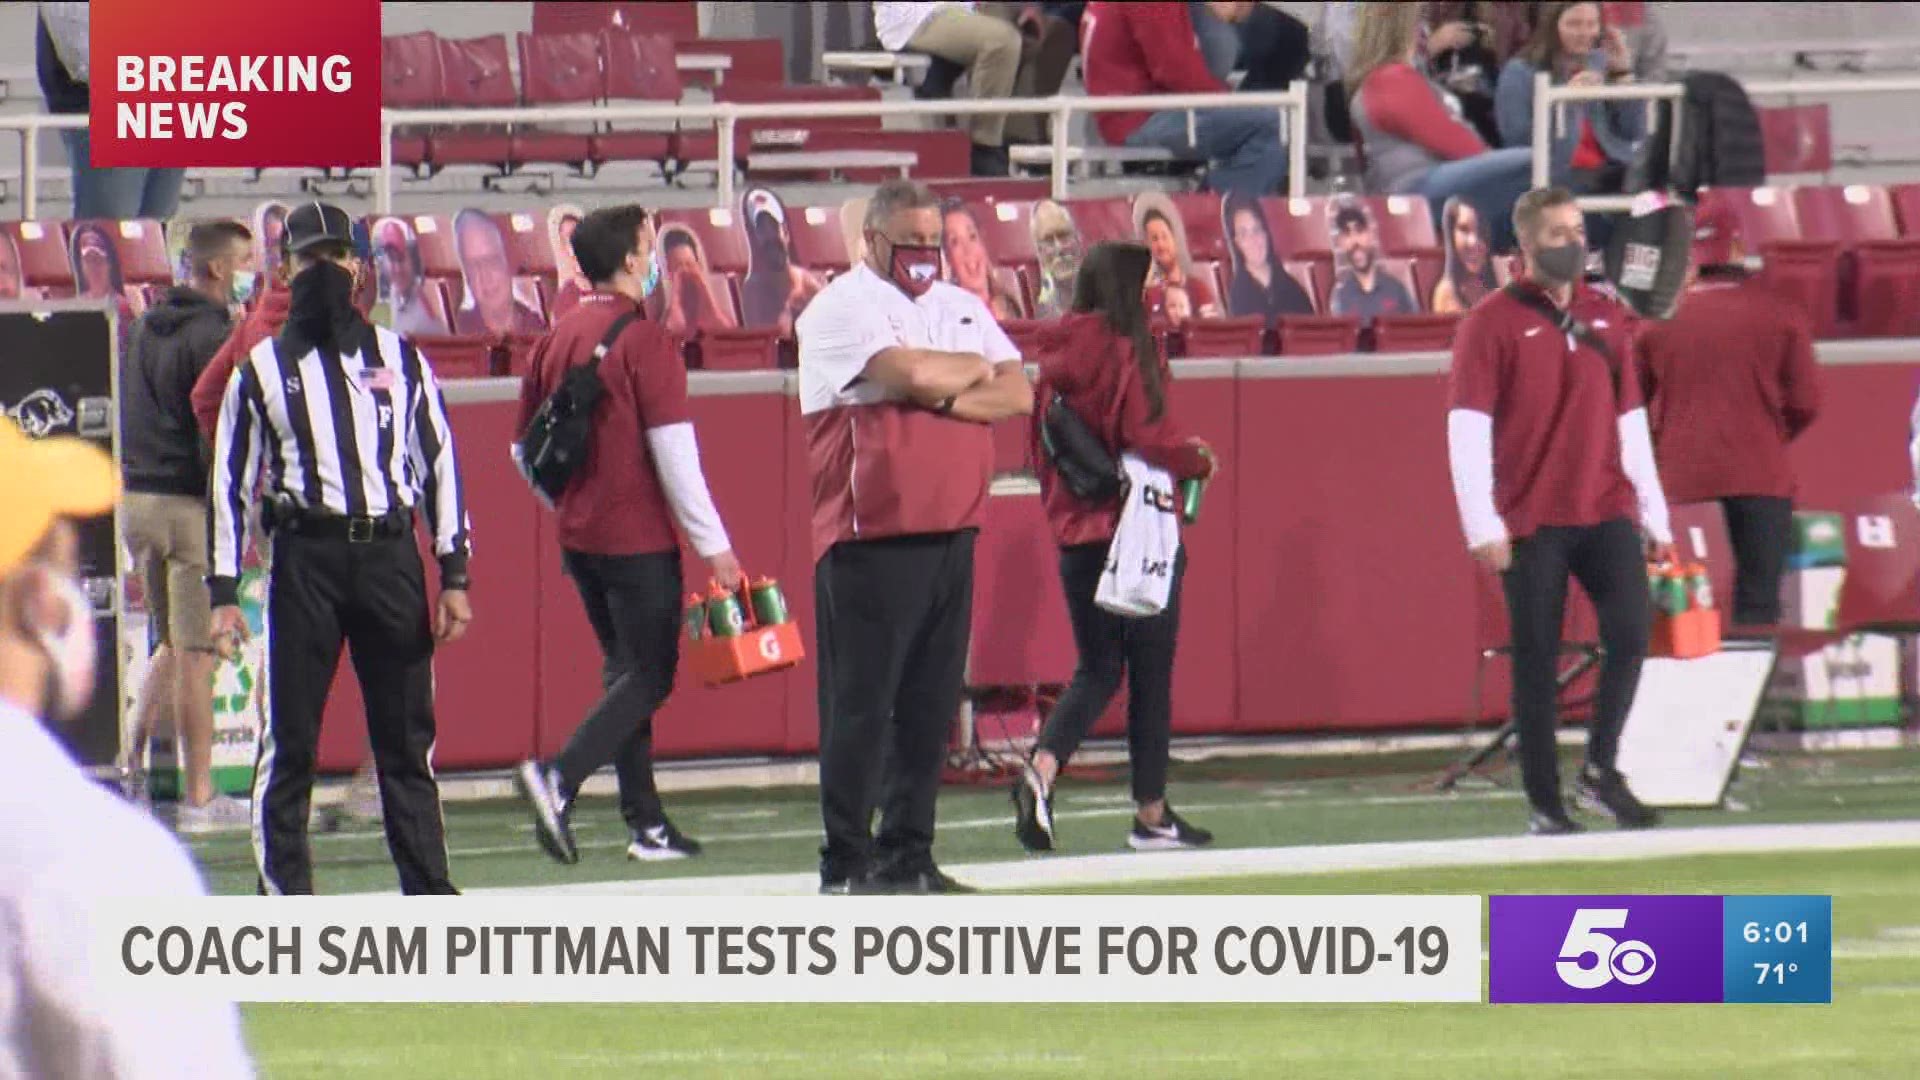 Head coach Sam Pittman has tested positive for COVID-19, the university says. https://bit.ly/36jitzL